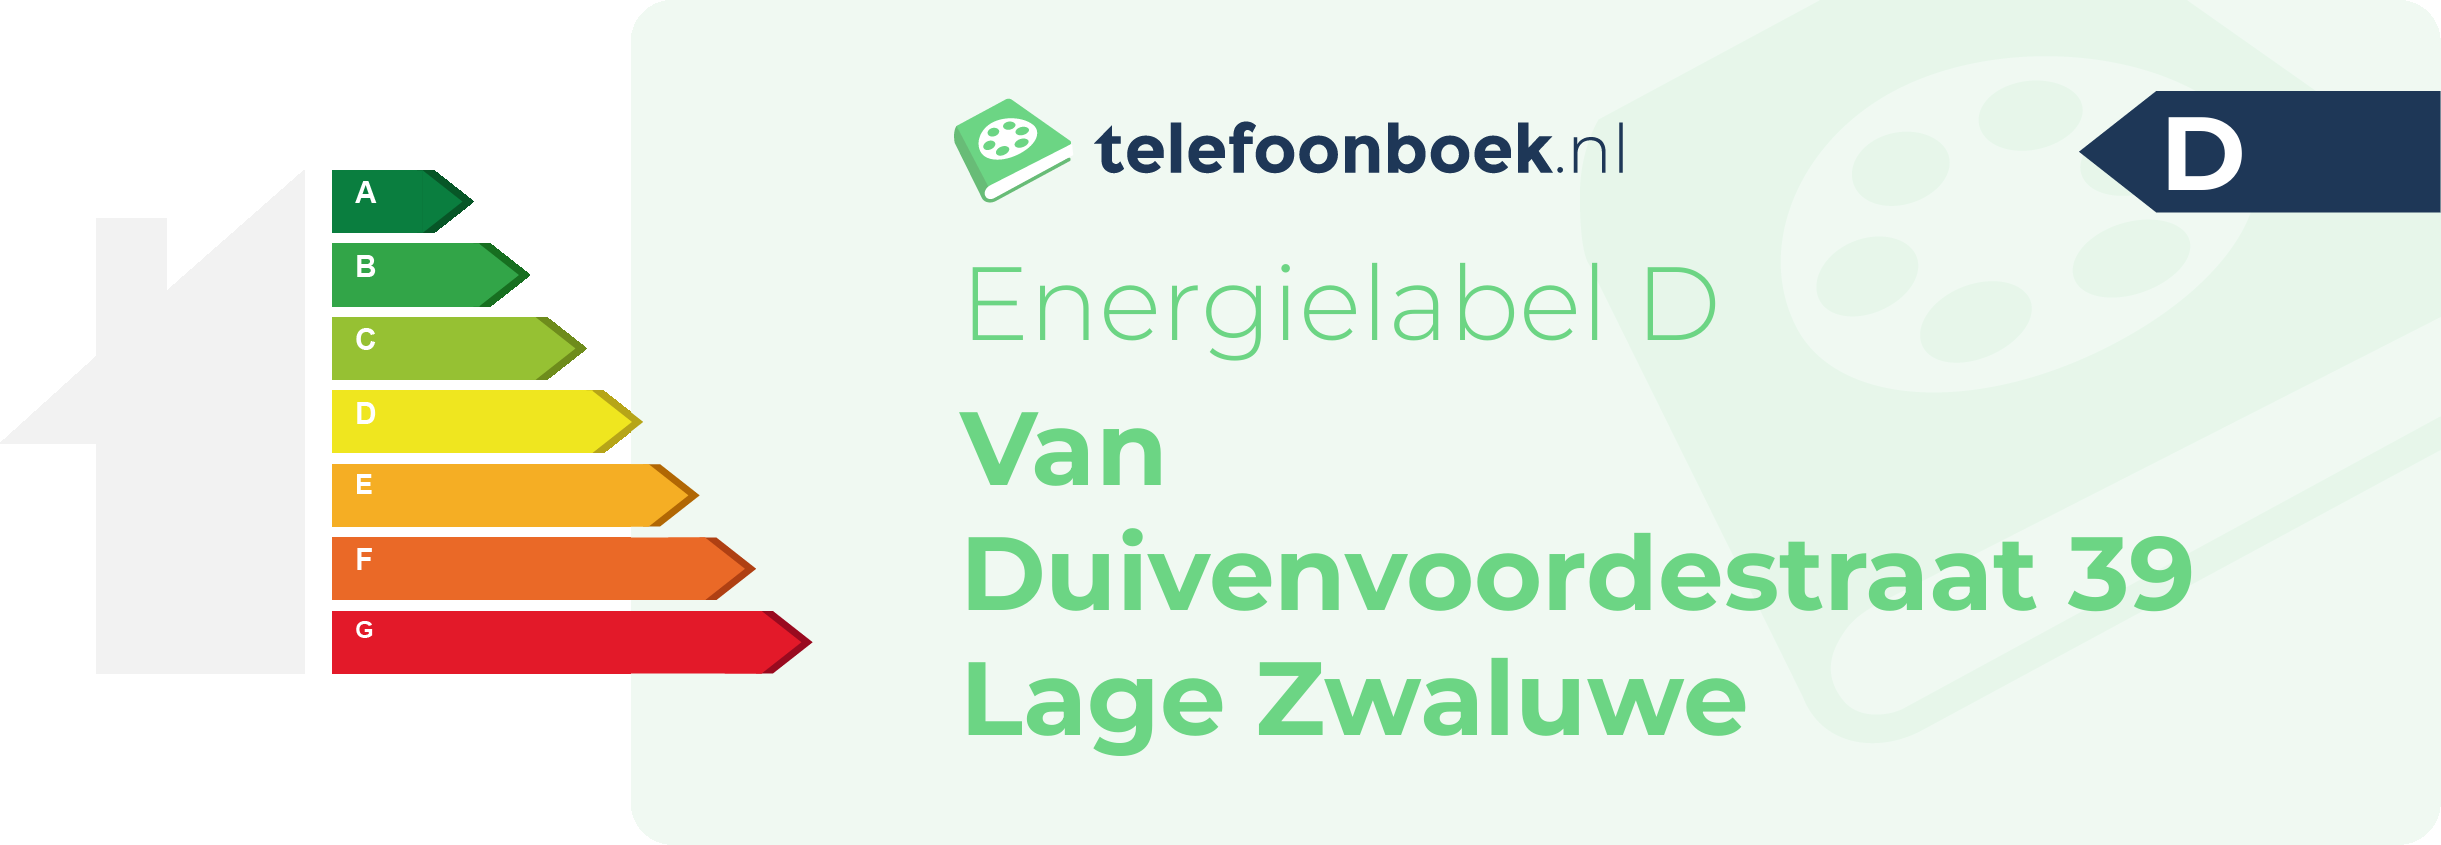 Energielabel Van Duivenvoordestraat 39 Lage Zwaluwe